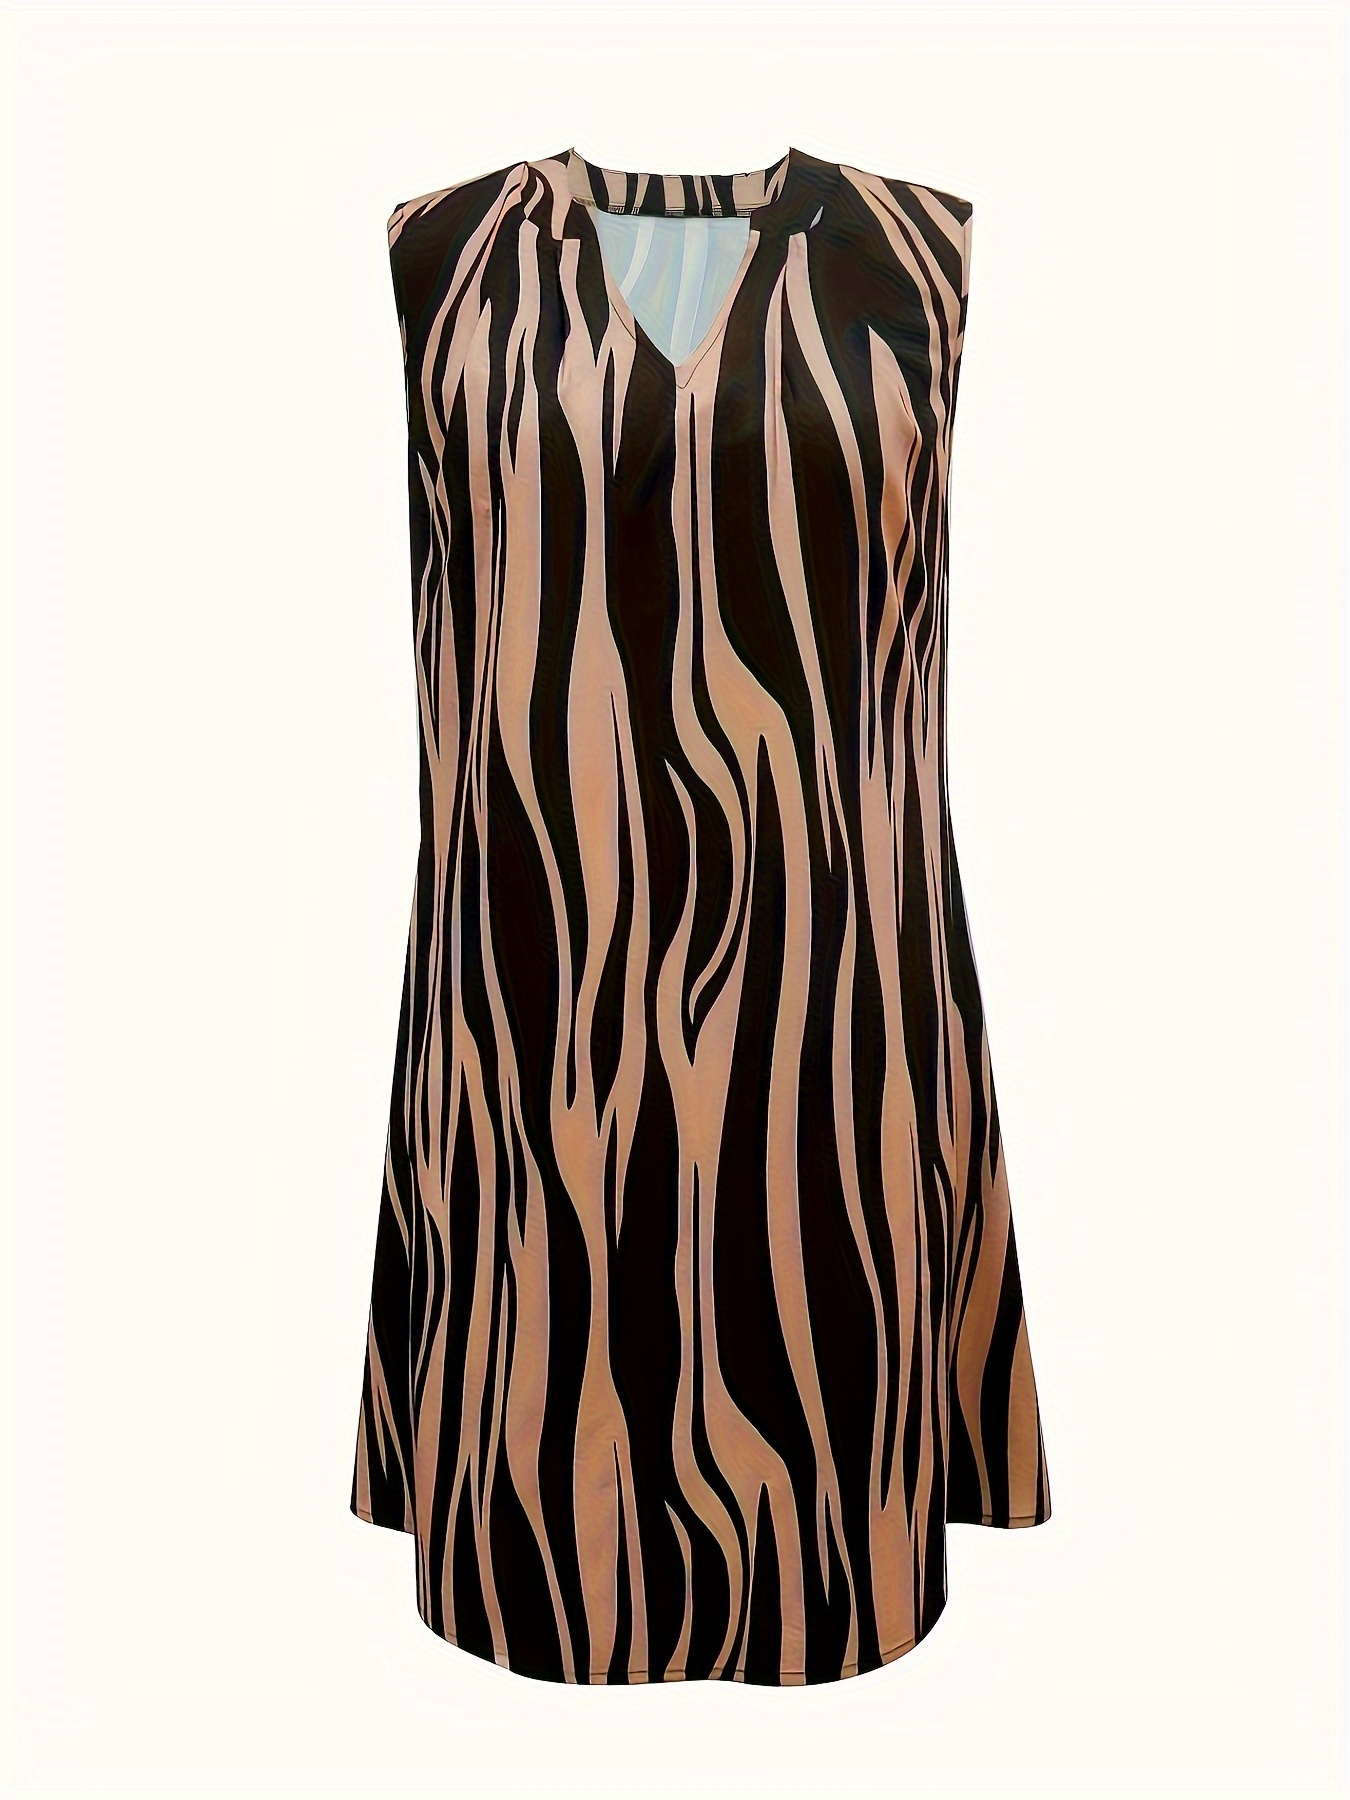 abstract ripple print dress casual v neck sleeveless dress womens clothing details 52